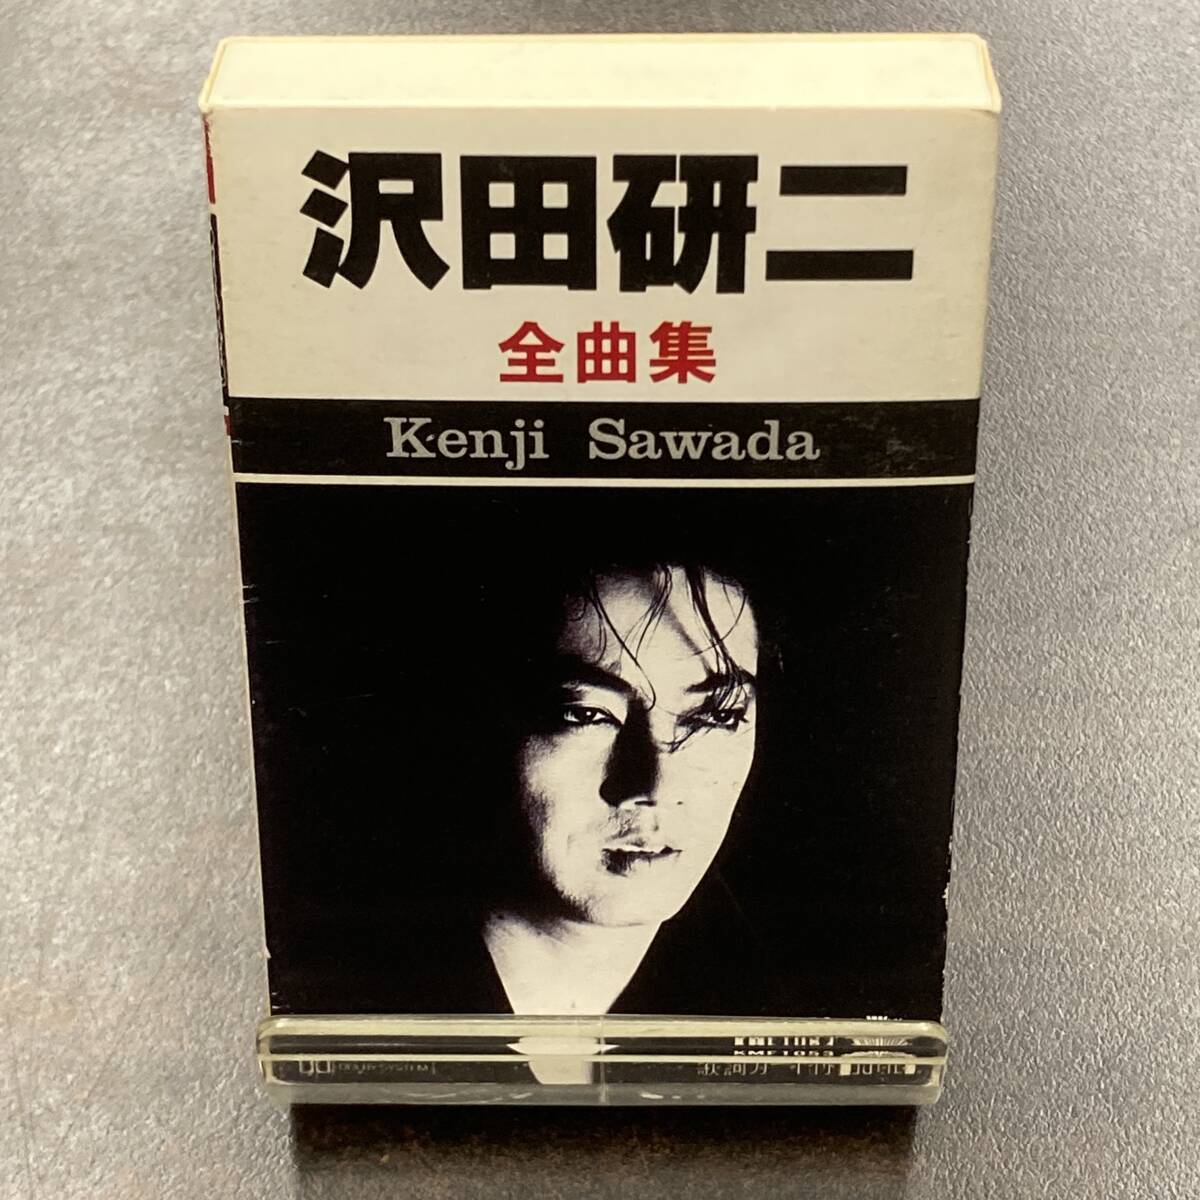 1088M 沢田研二 全曲集 カセットテープ / Kenji Sawada Idol Cassette Tapeの画像1